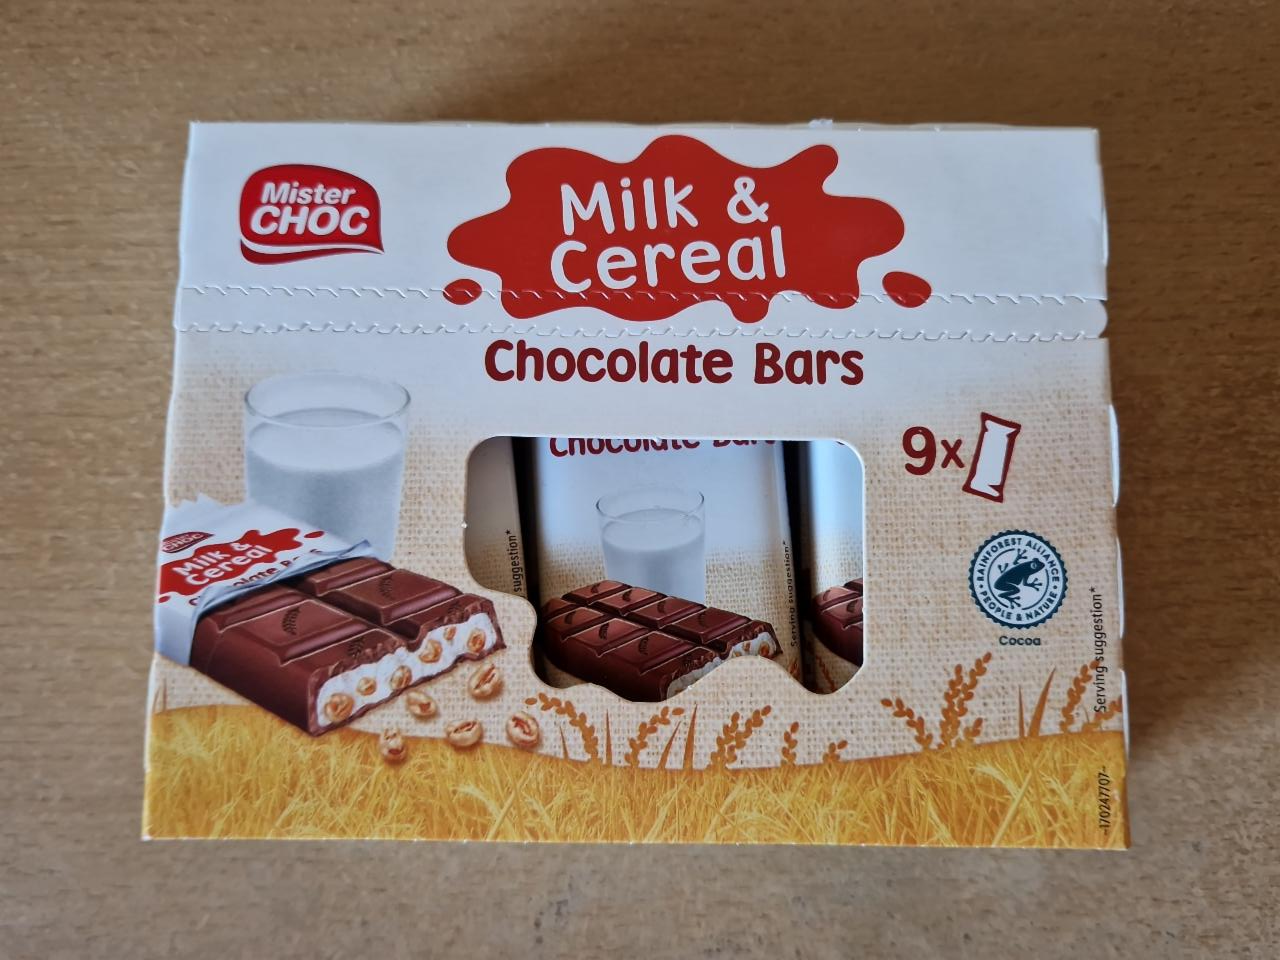 Képek - Milk&Cereal Chocolate Bars Mister Choc